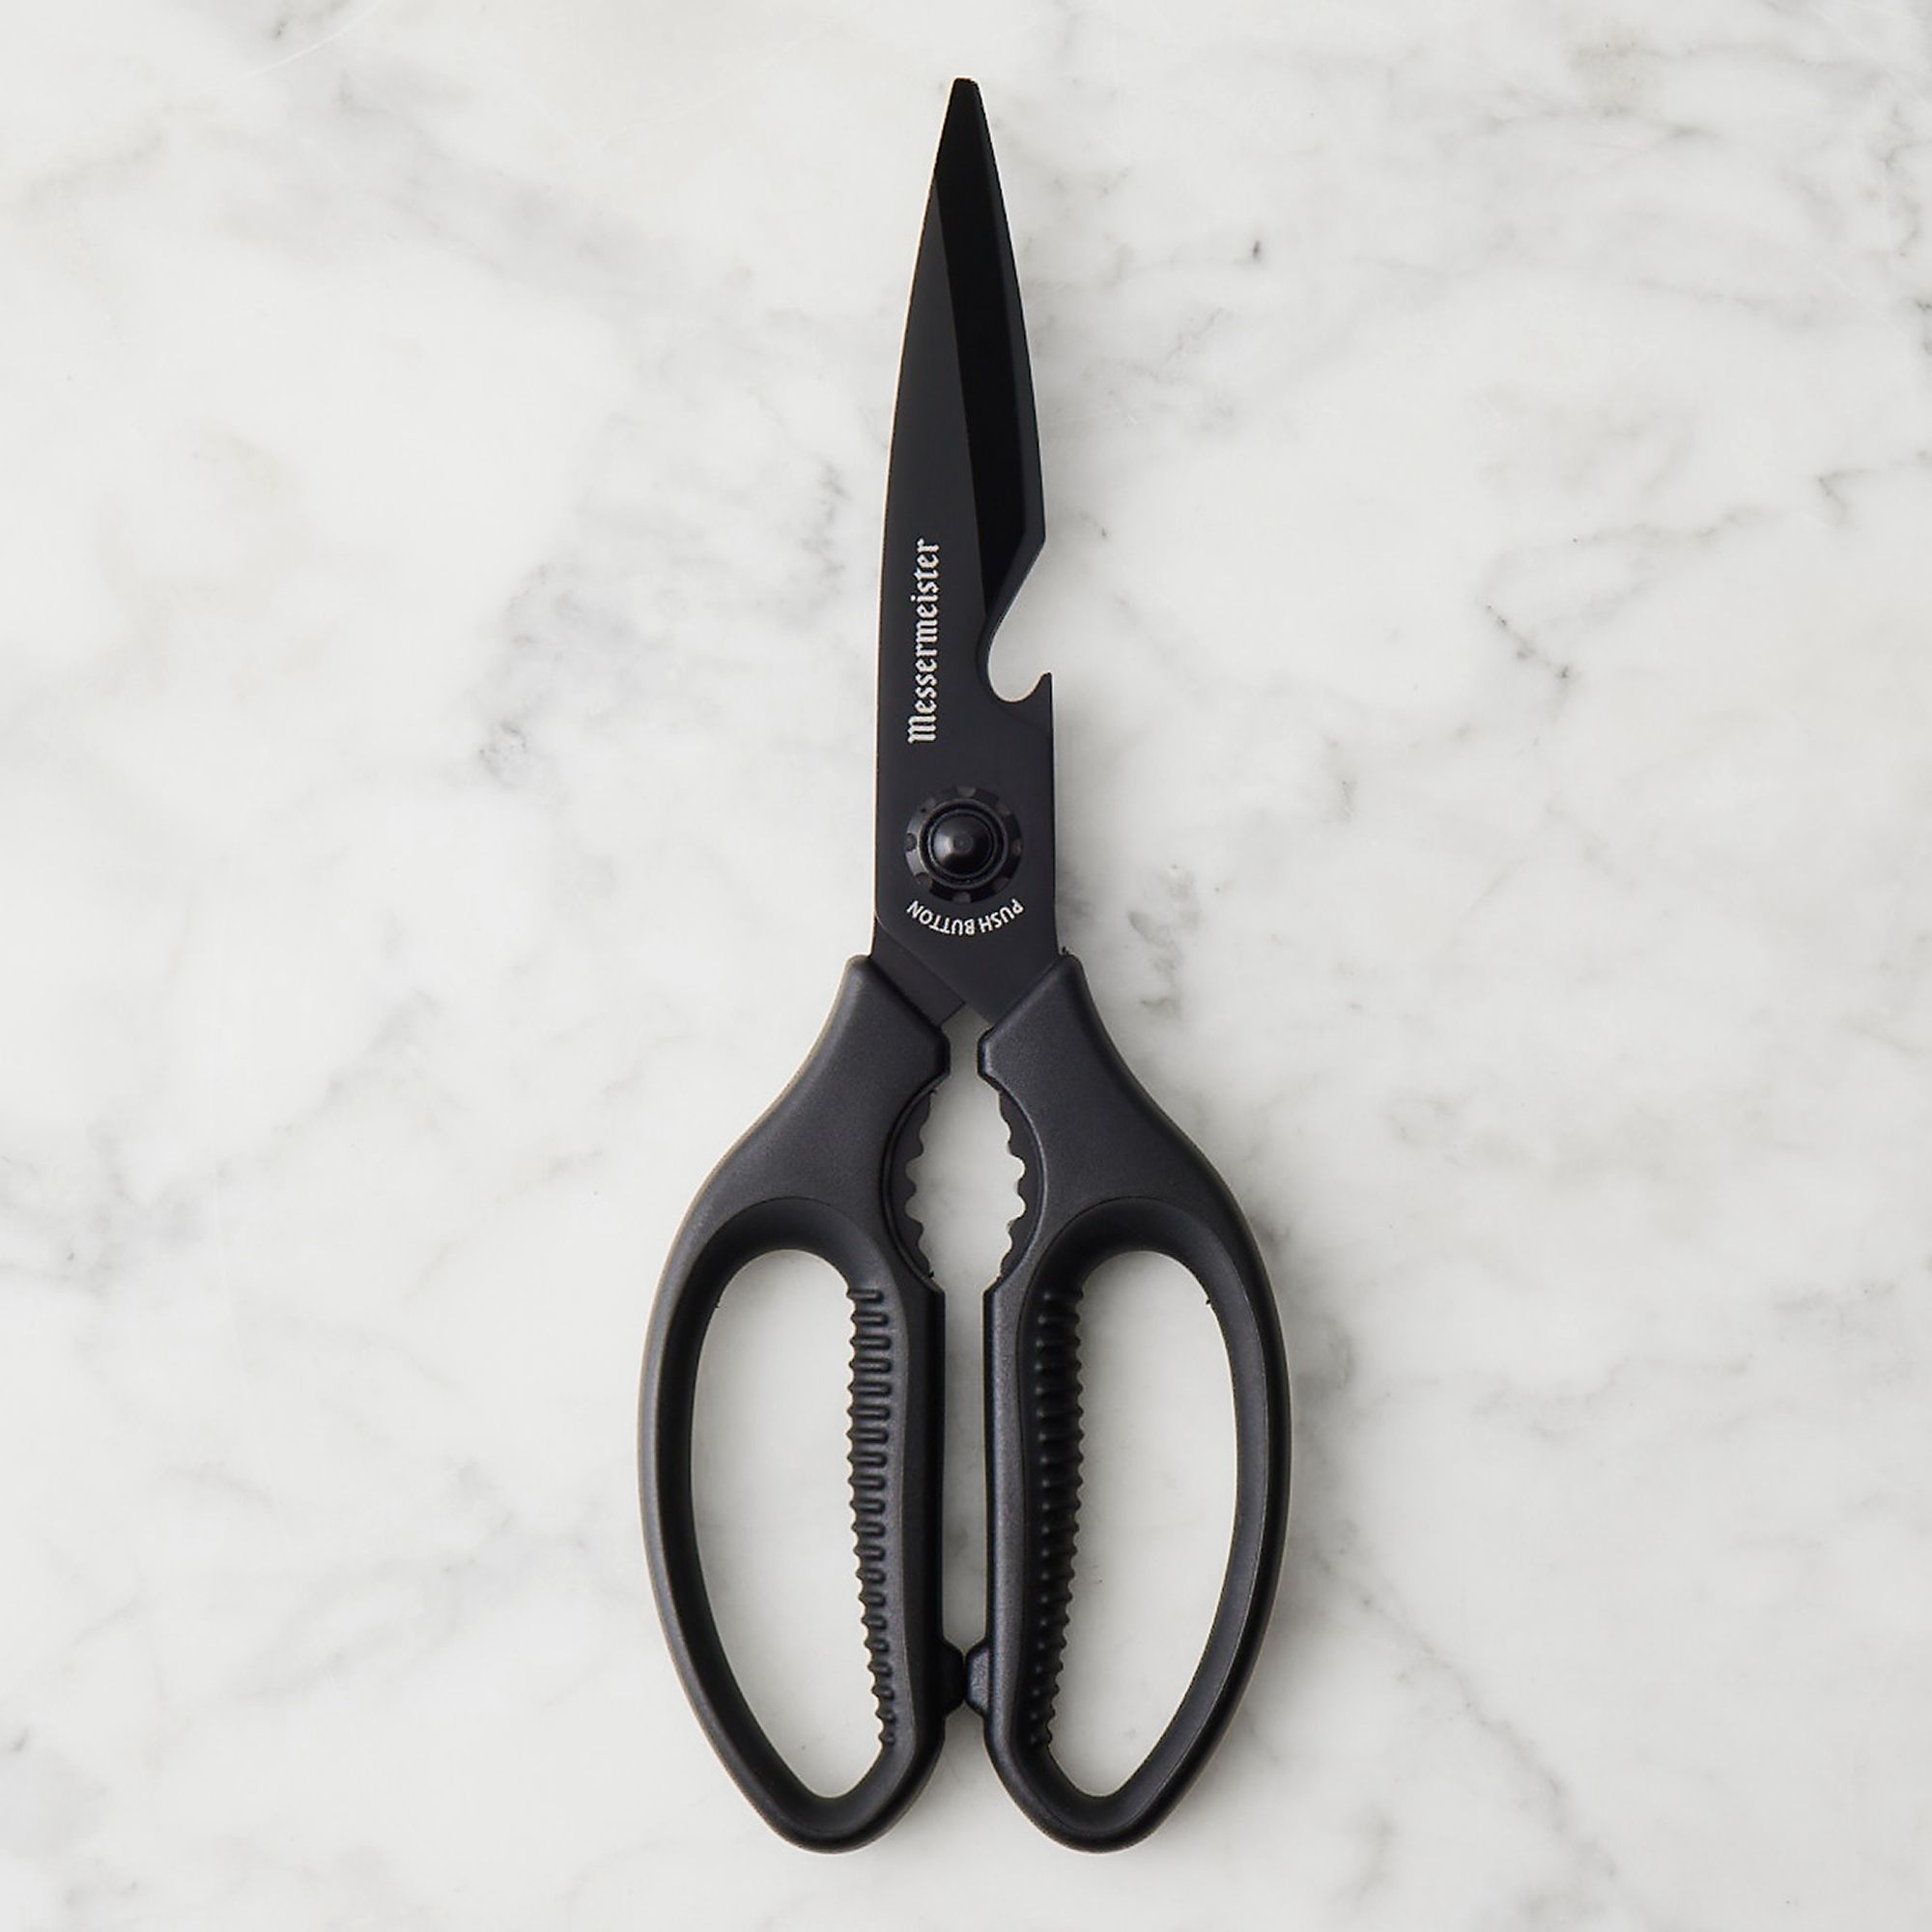 EBM All-Stainless Steel Take-Apart Kitchen Scissors